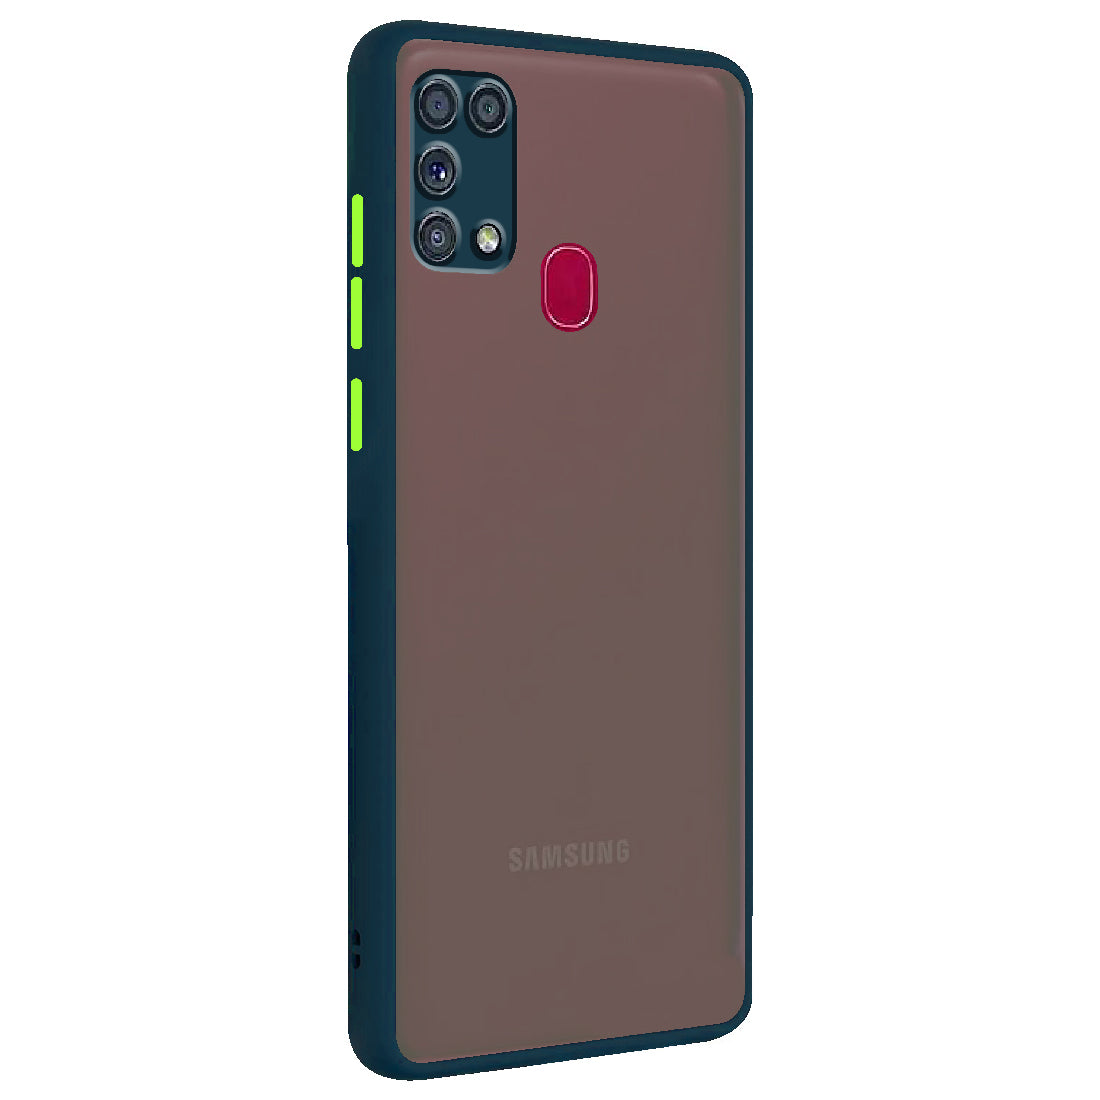 Smoke Back Case Cover for Samsung Galaxy M31 Prime / M31 / F41